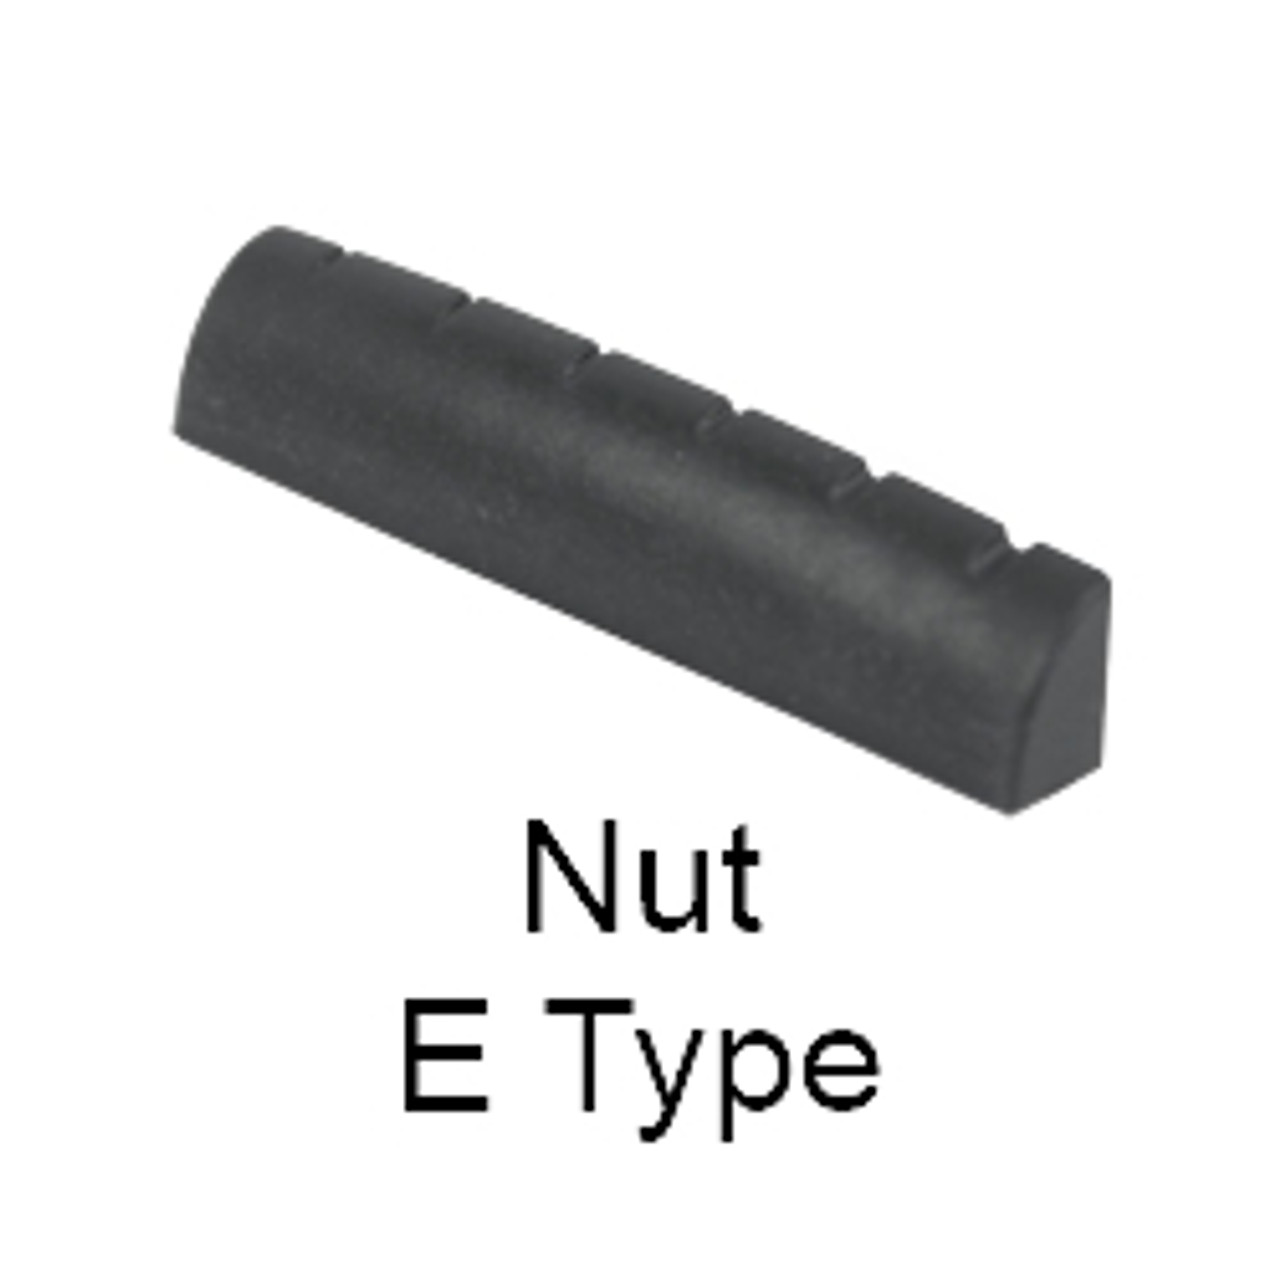 PTFE Nut